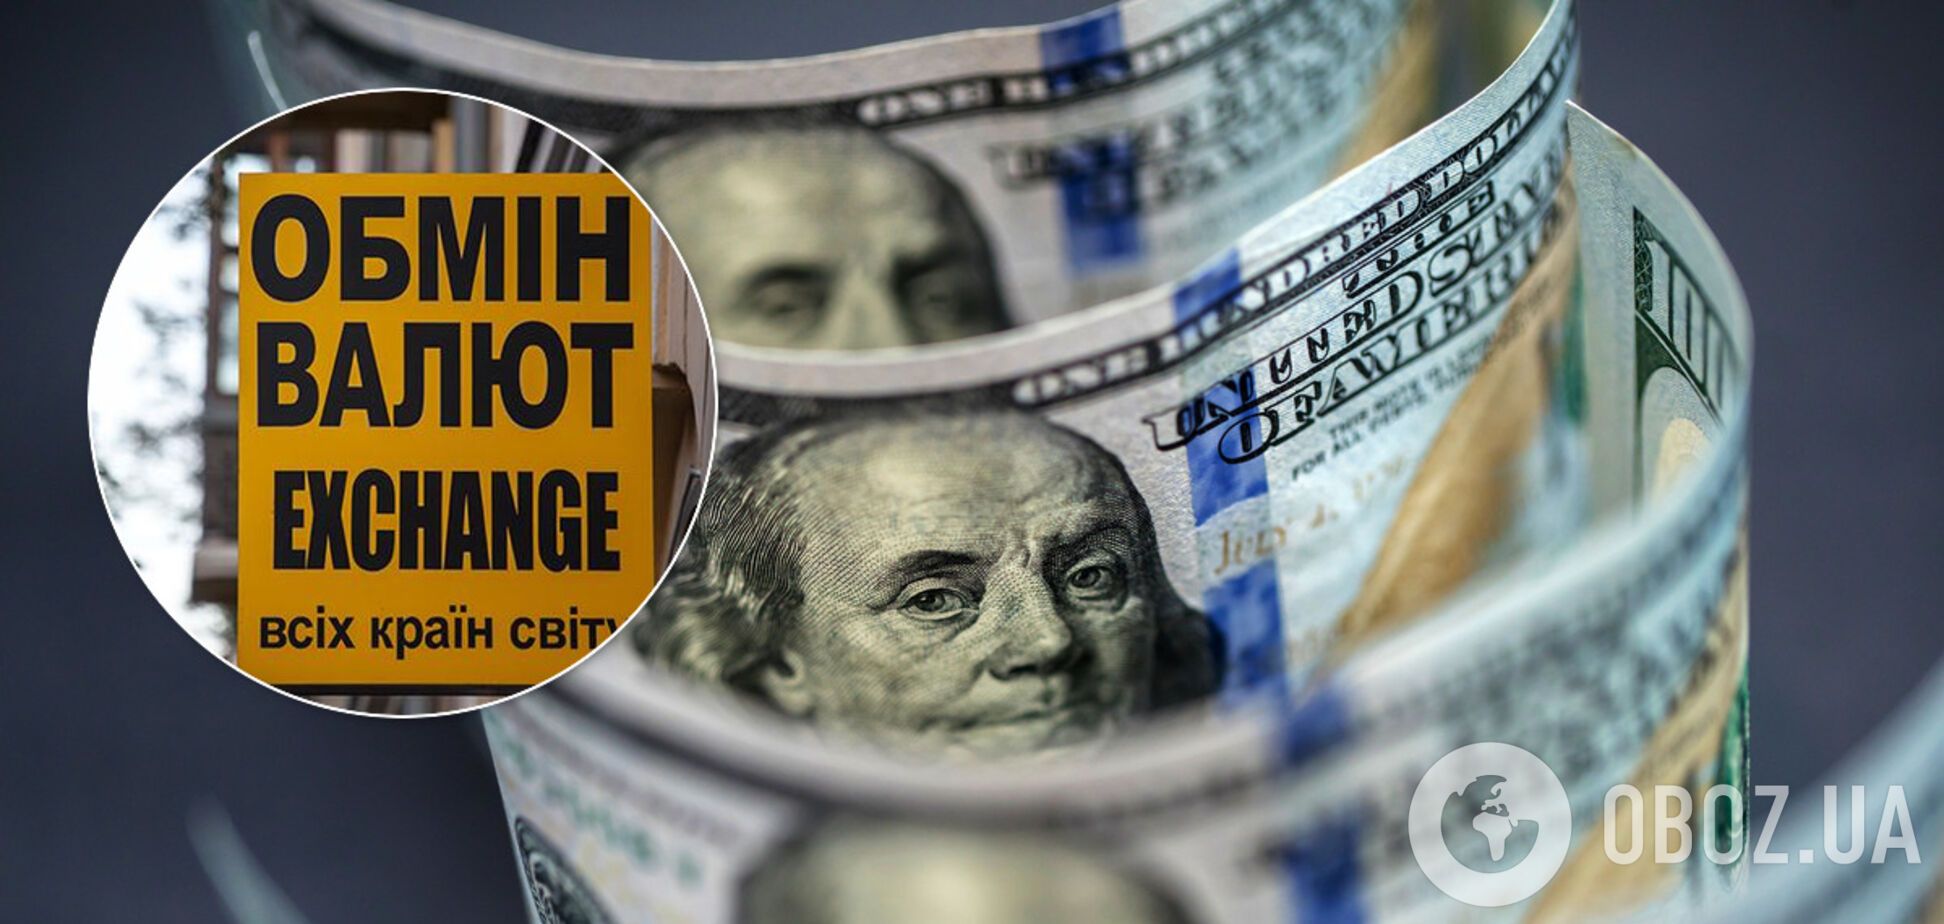 НБУ установил рекордно низкий курс доллара после праздников